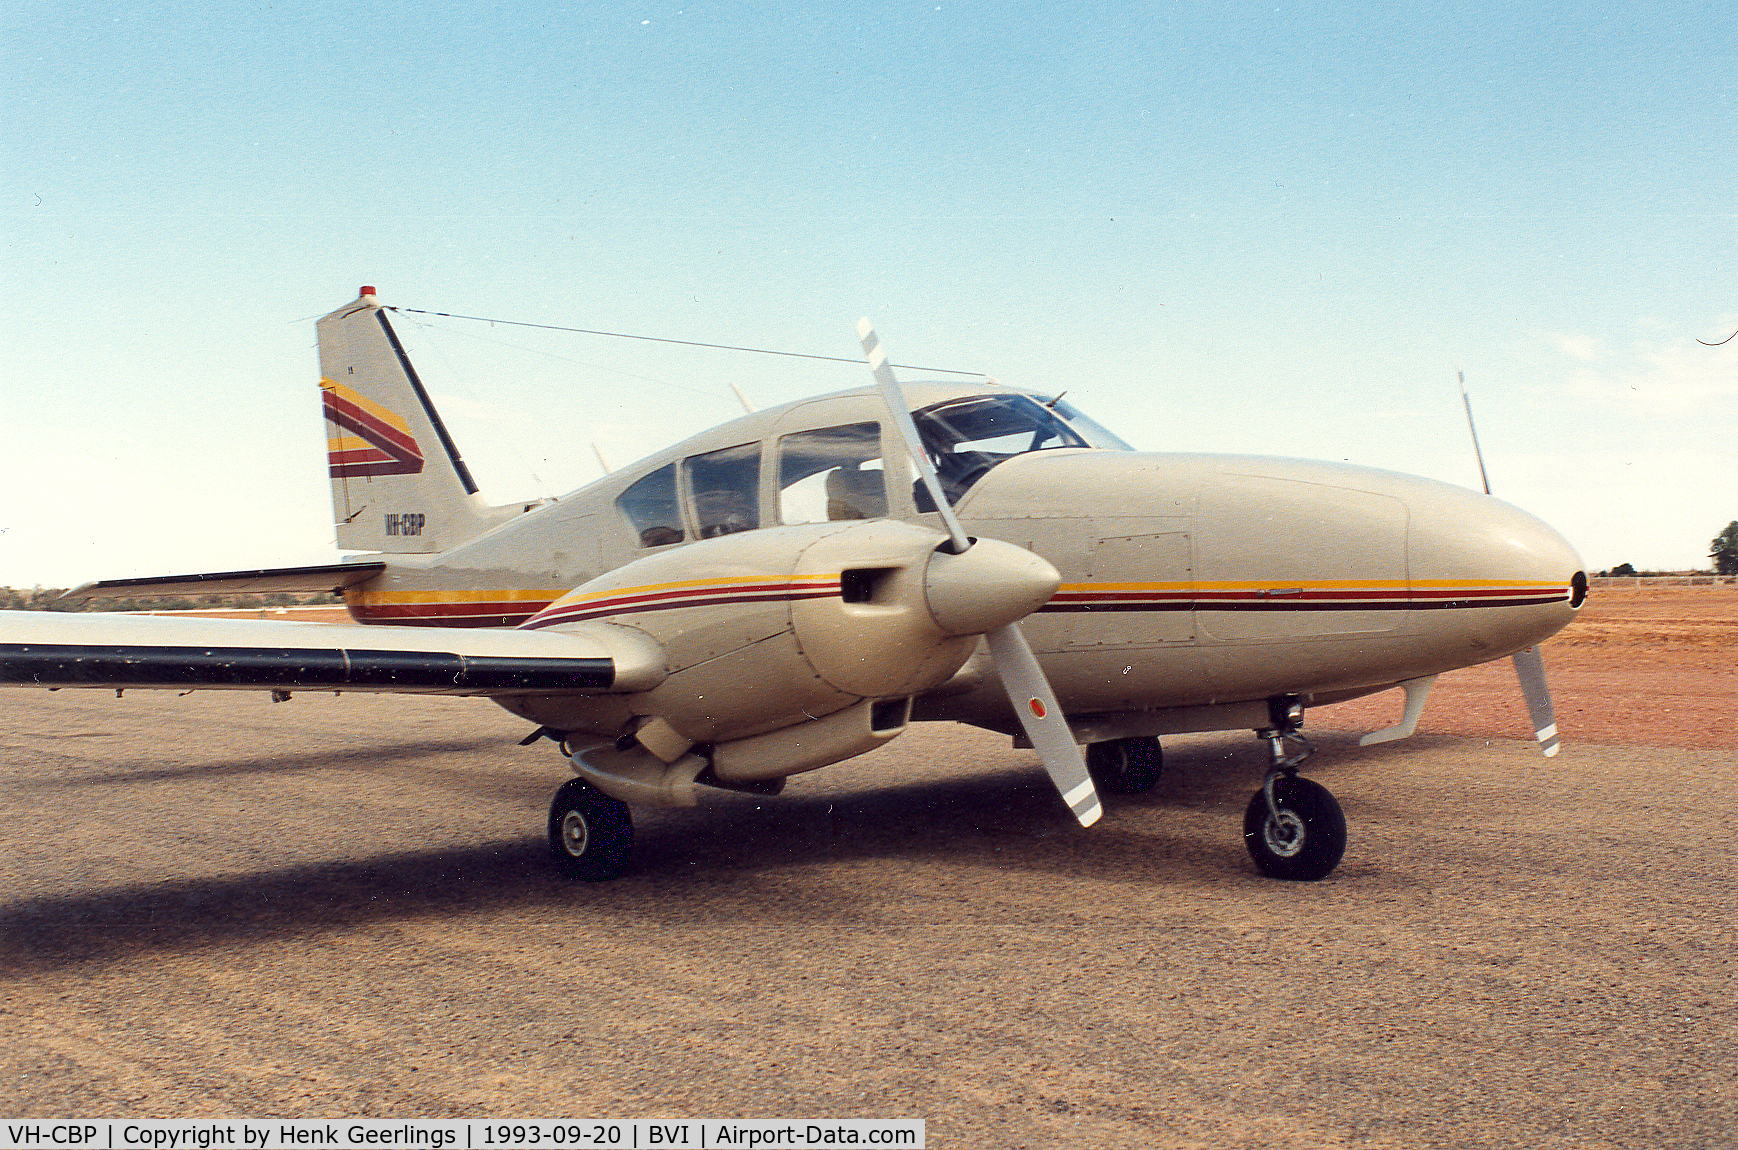 VH-CBP, 1965 Piper PA-23-250 Aztec C C/N 27-2875, Charter for Australian Army